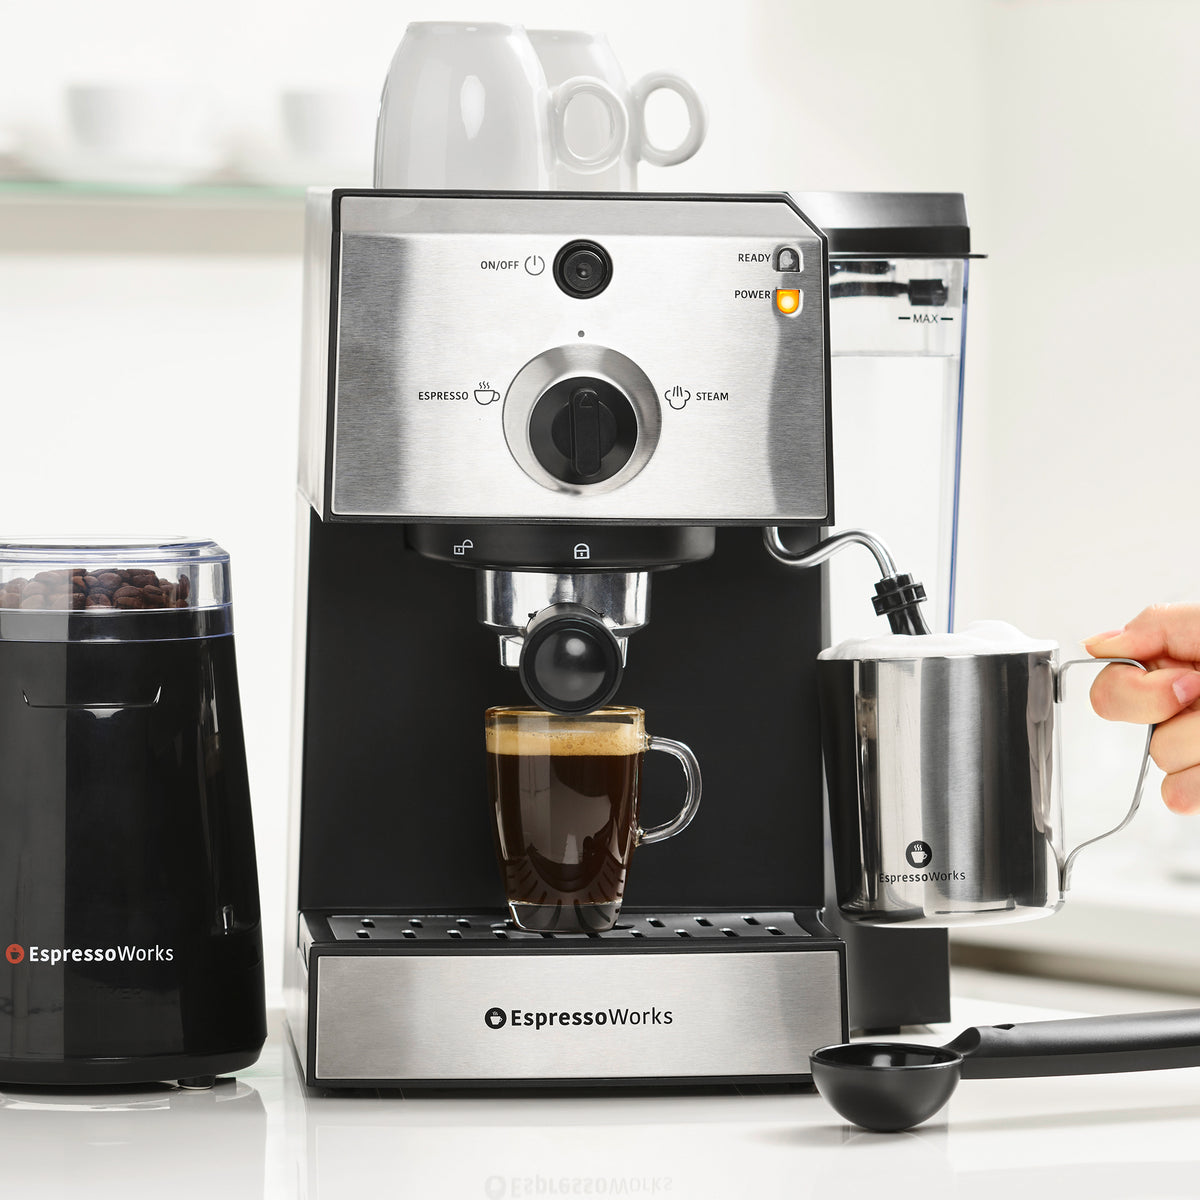 How the Delonghi Coffee Machine Works?